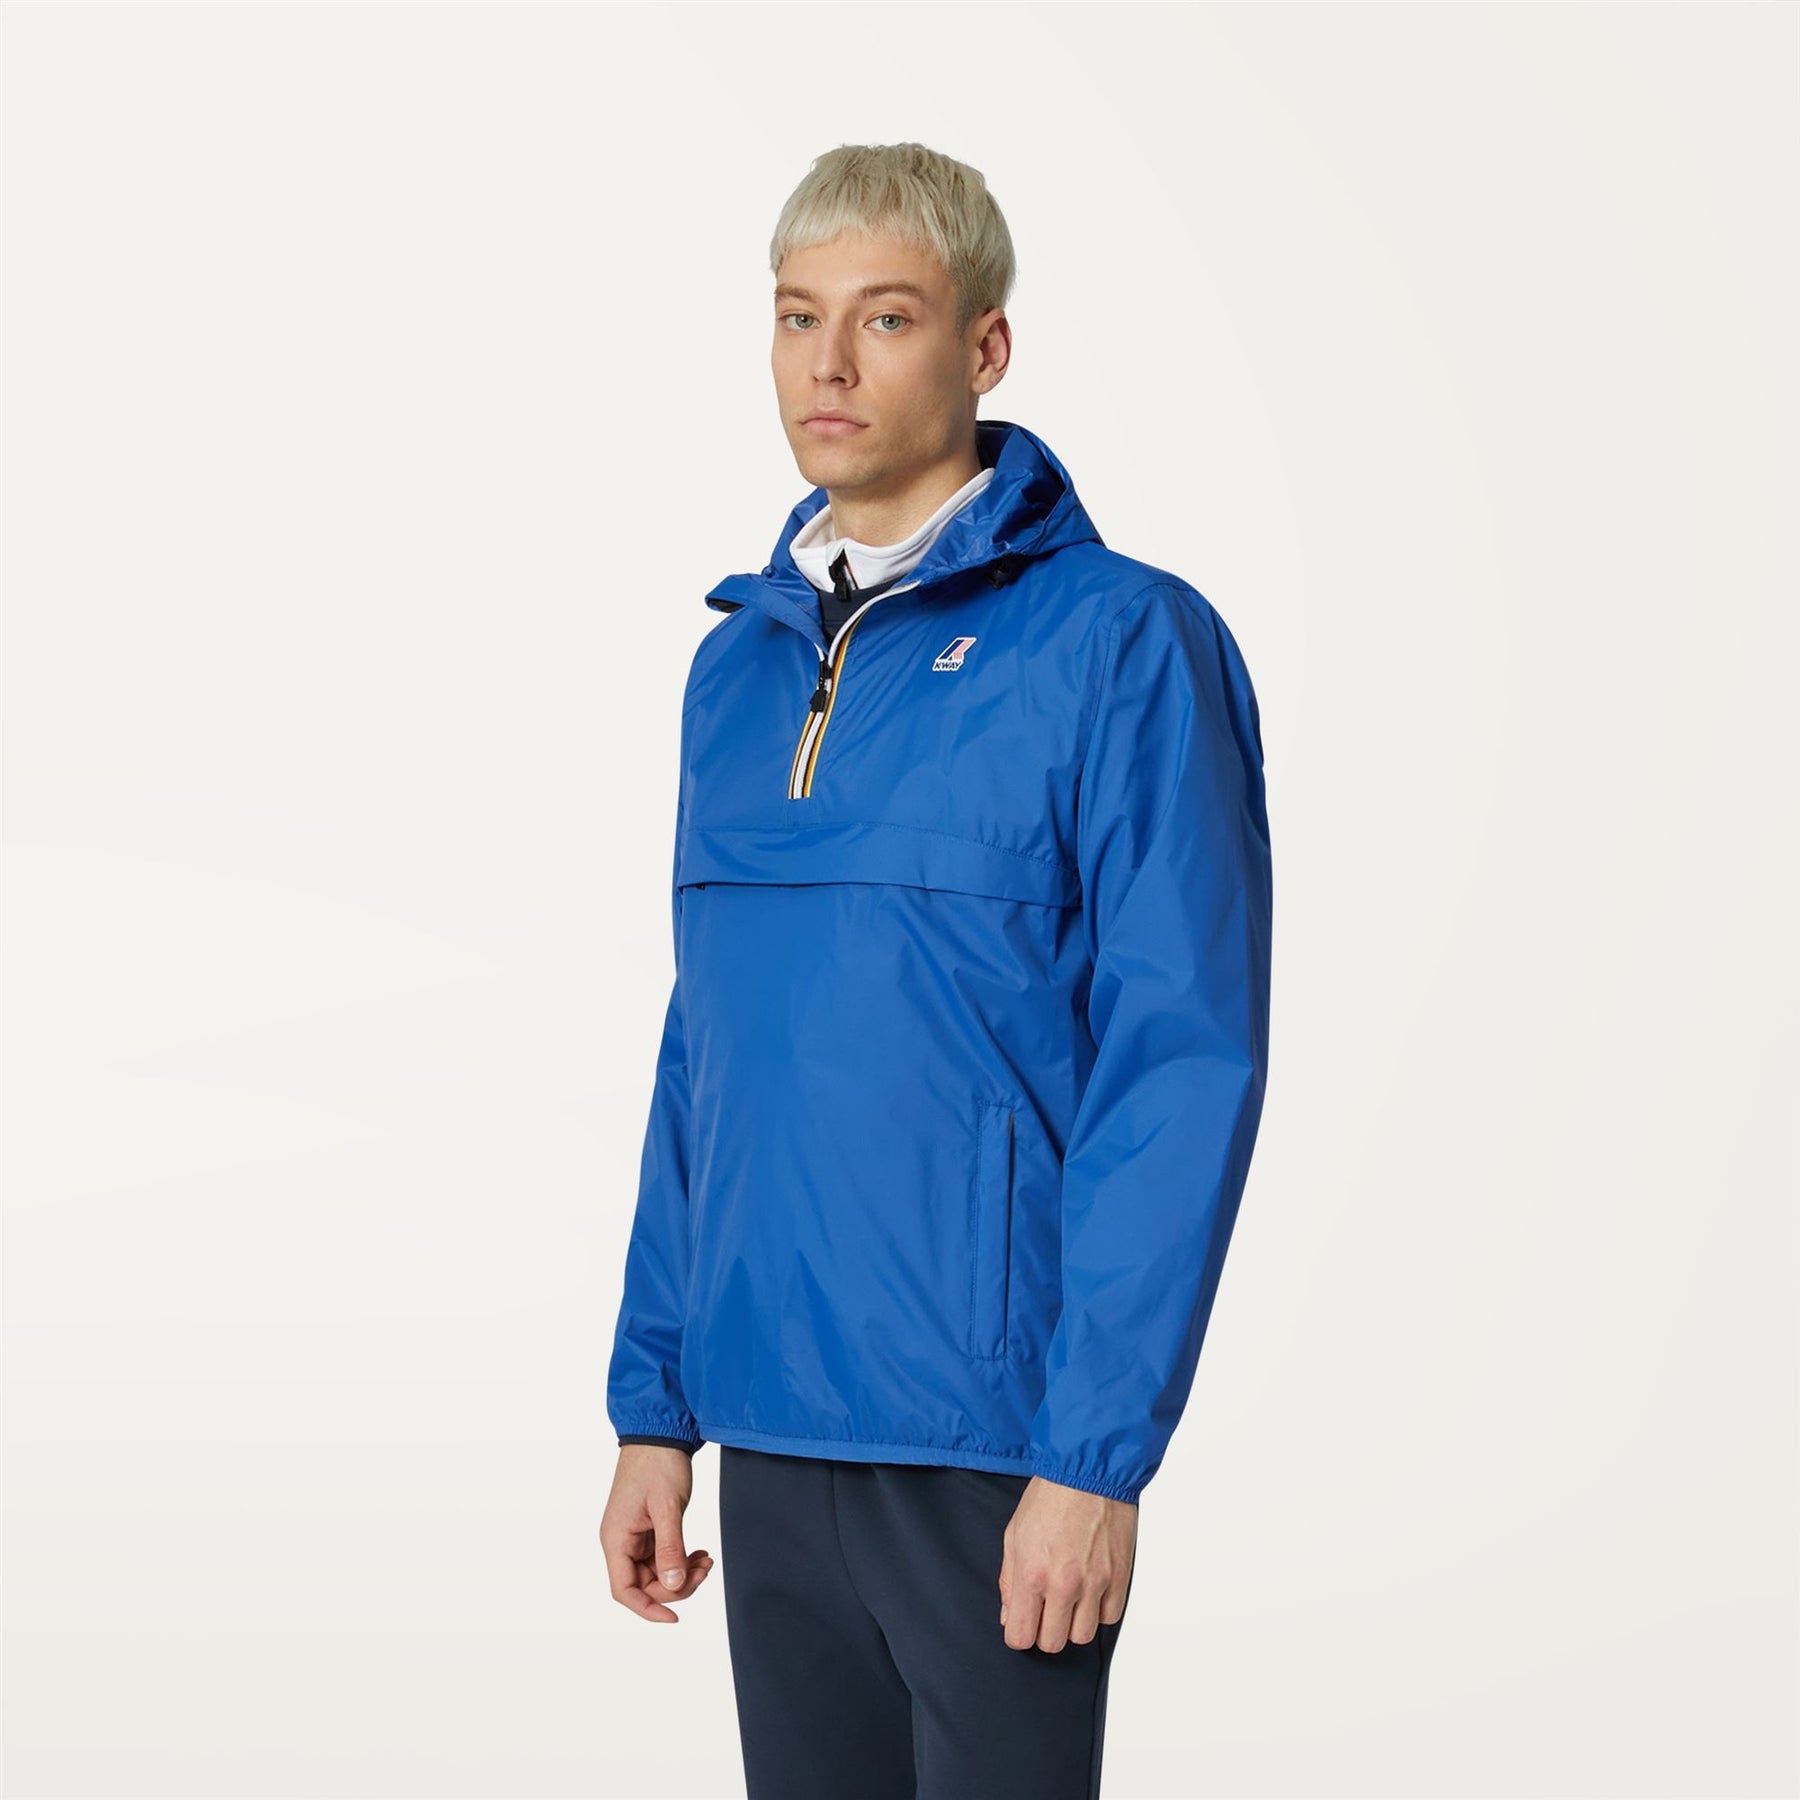 Leon - Packable Quarter Zip Rain Jacket in Blue Royal Marine